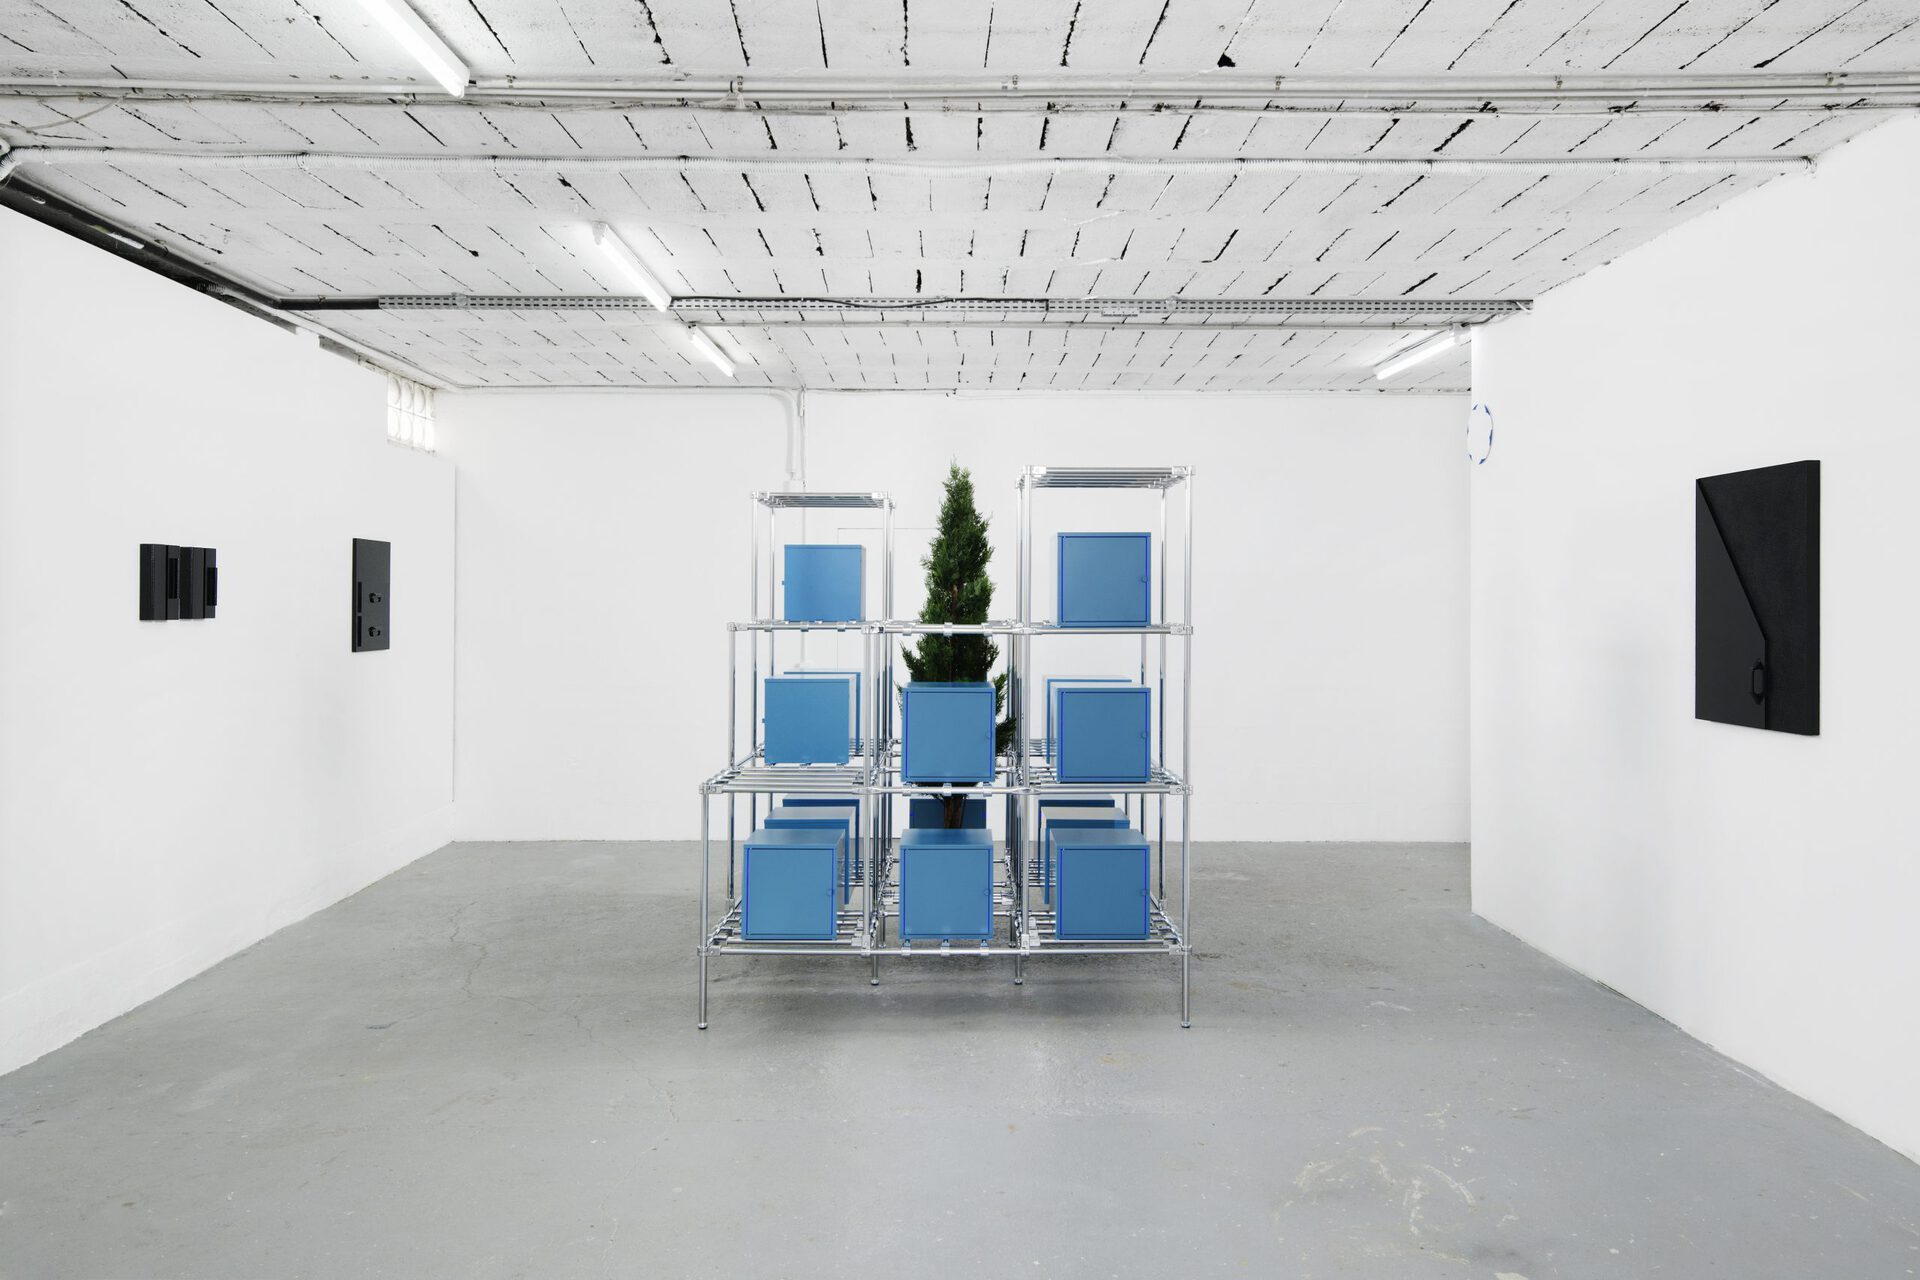 Jordan Derrien, Antoine Duchenet, exhibition view at W, Pantin.